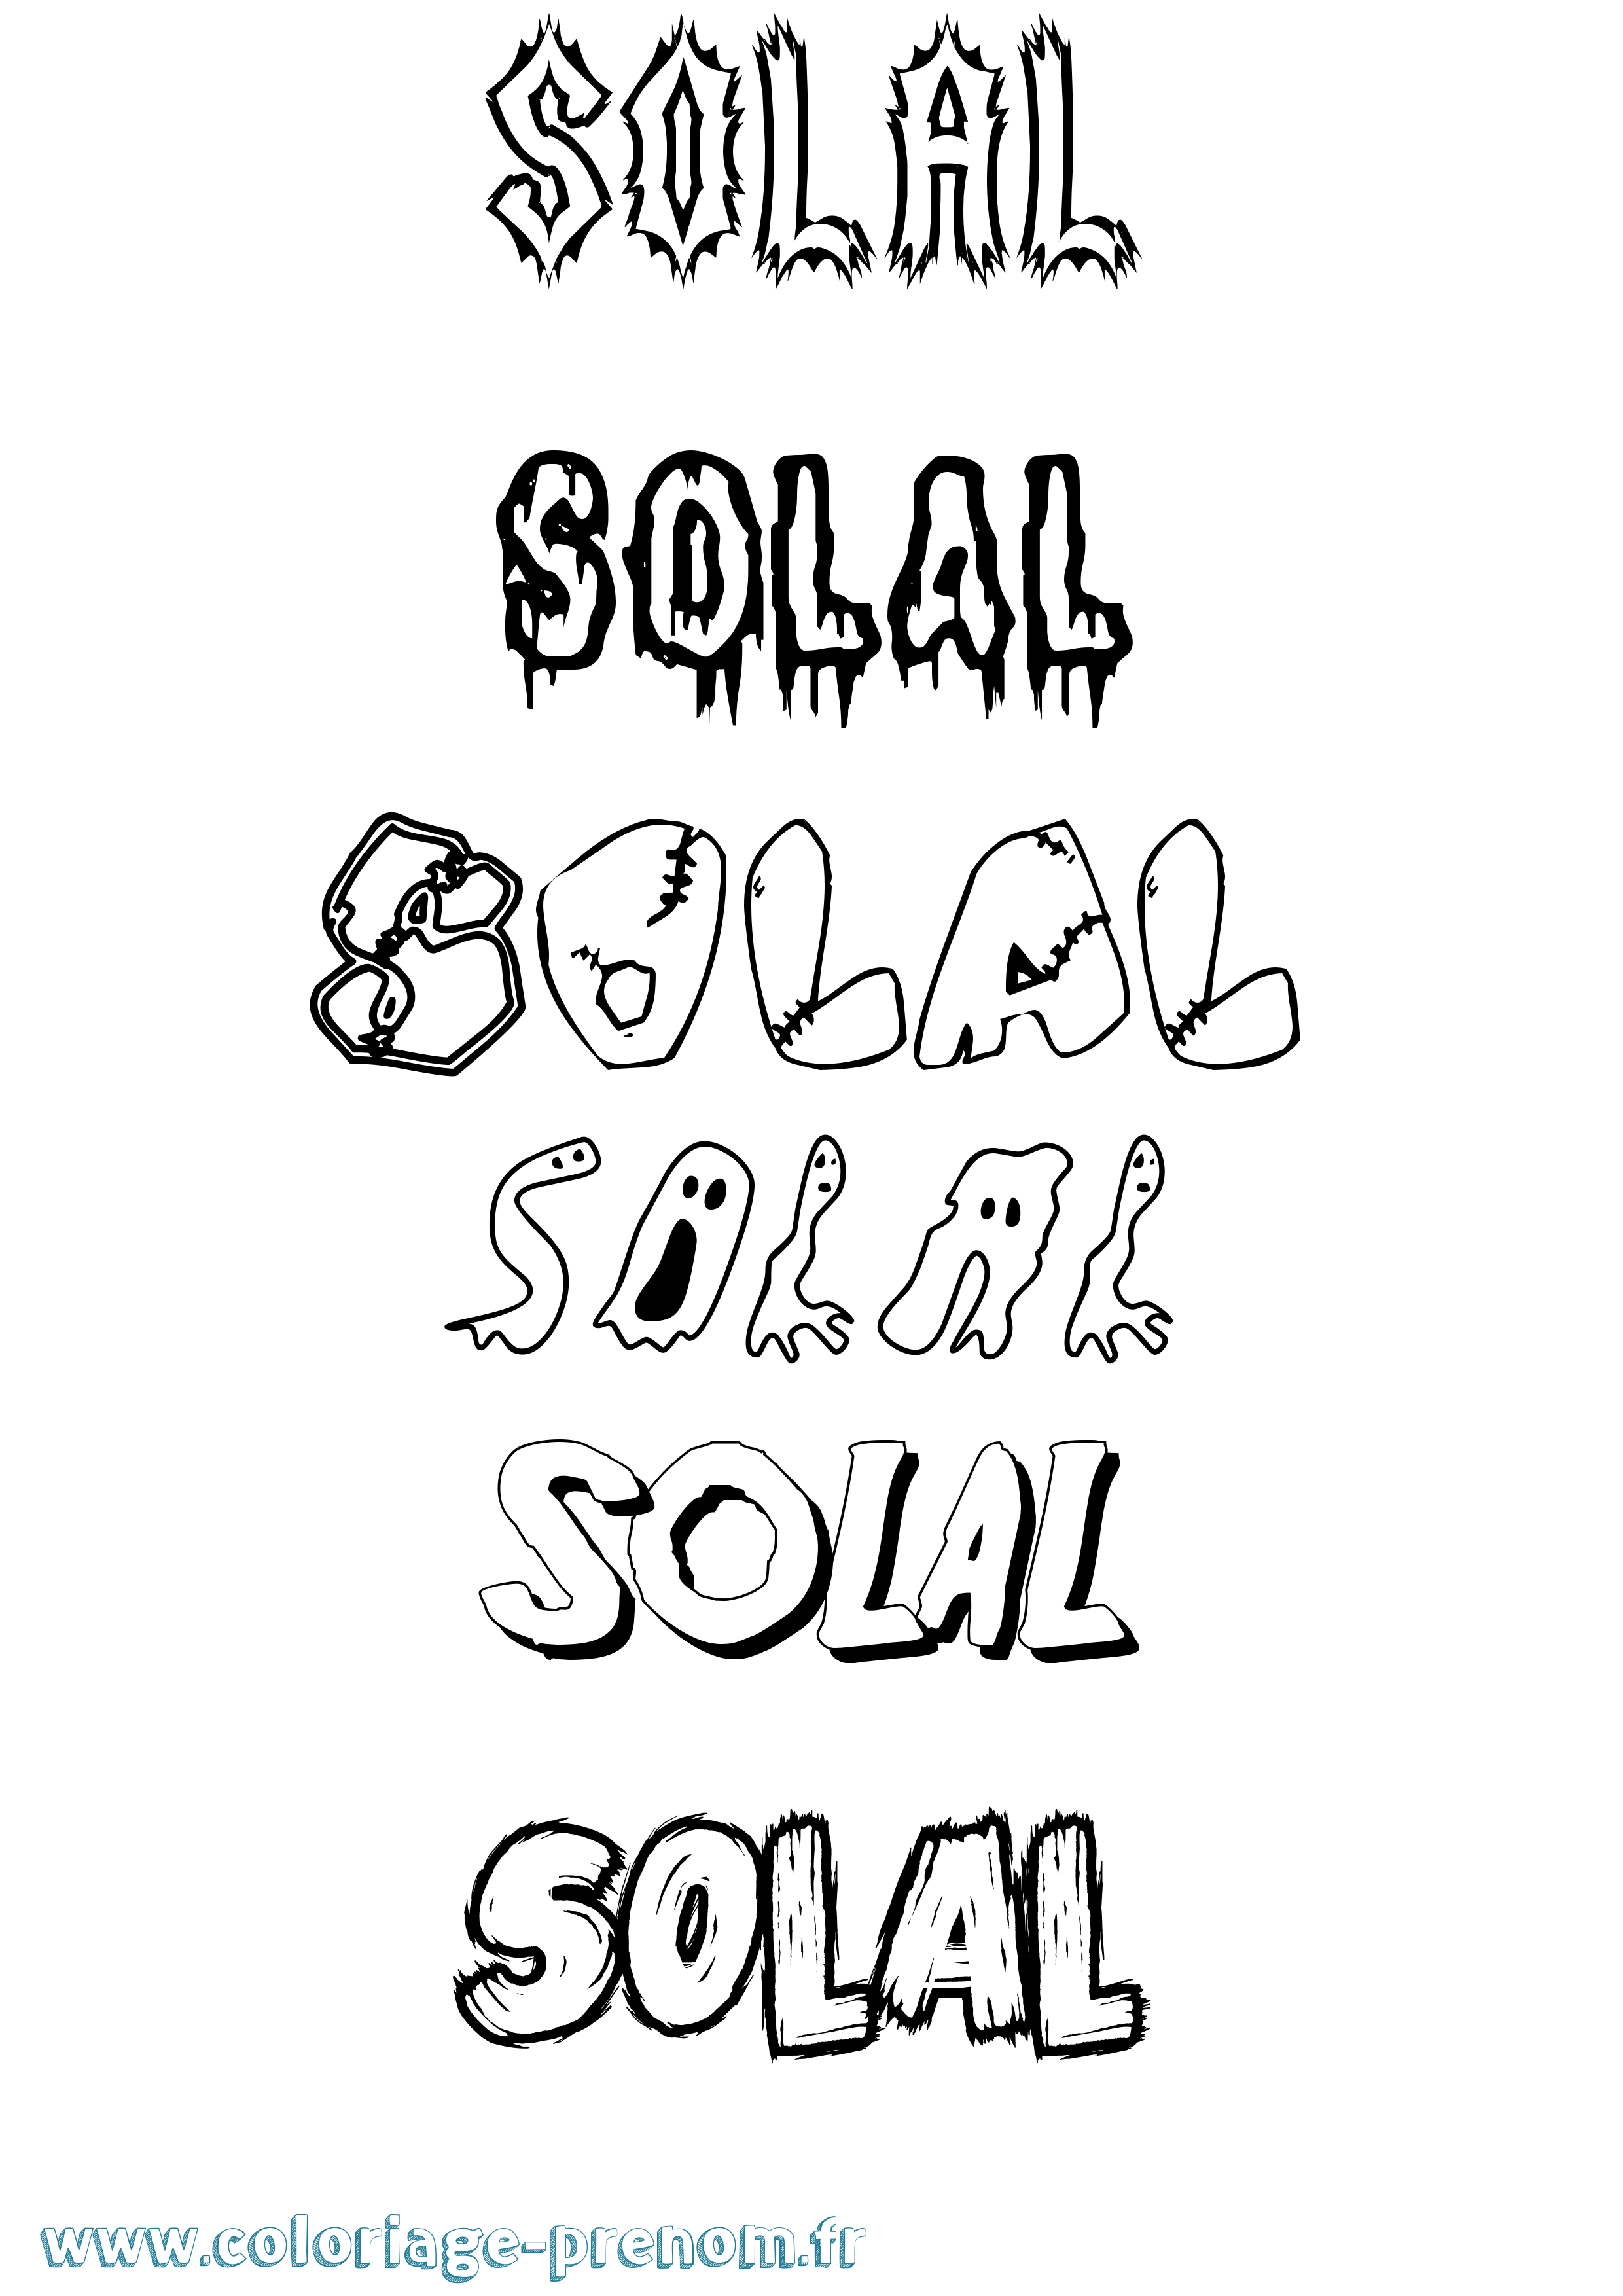 Coloriage prénom Solal Frisson